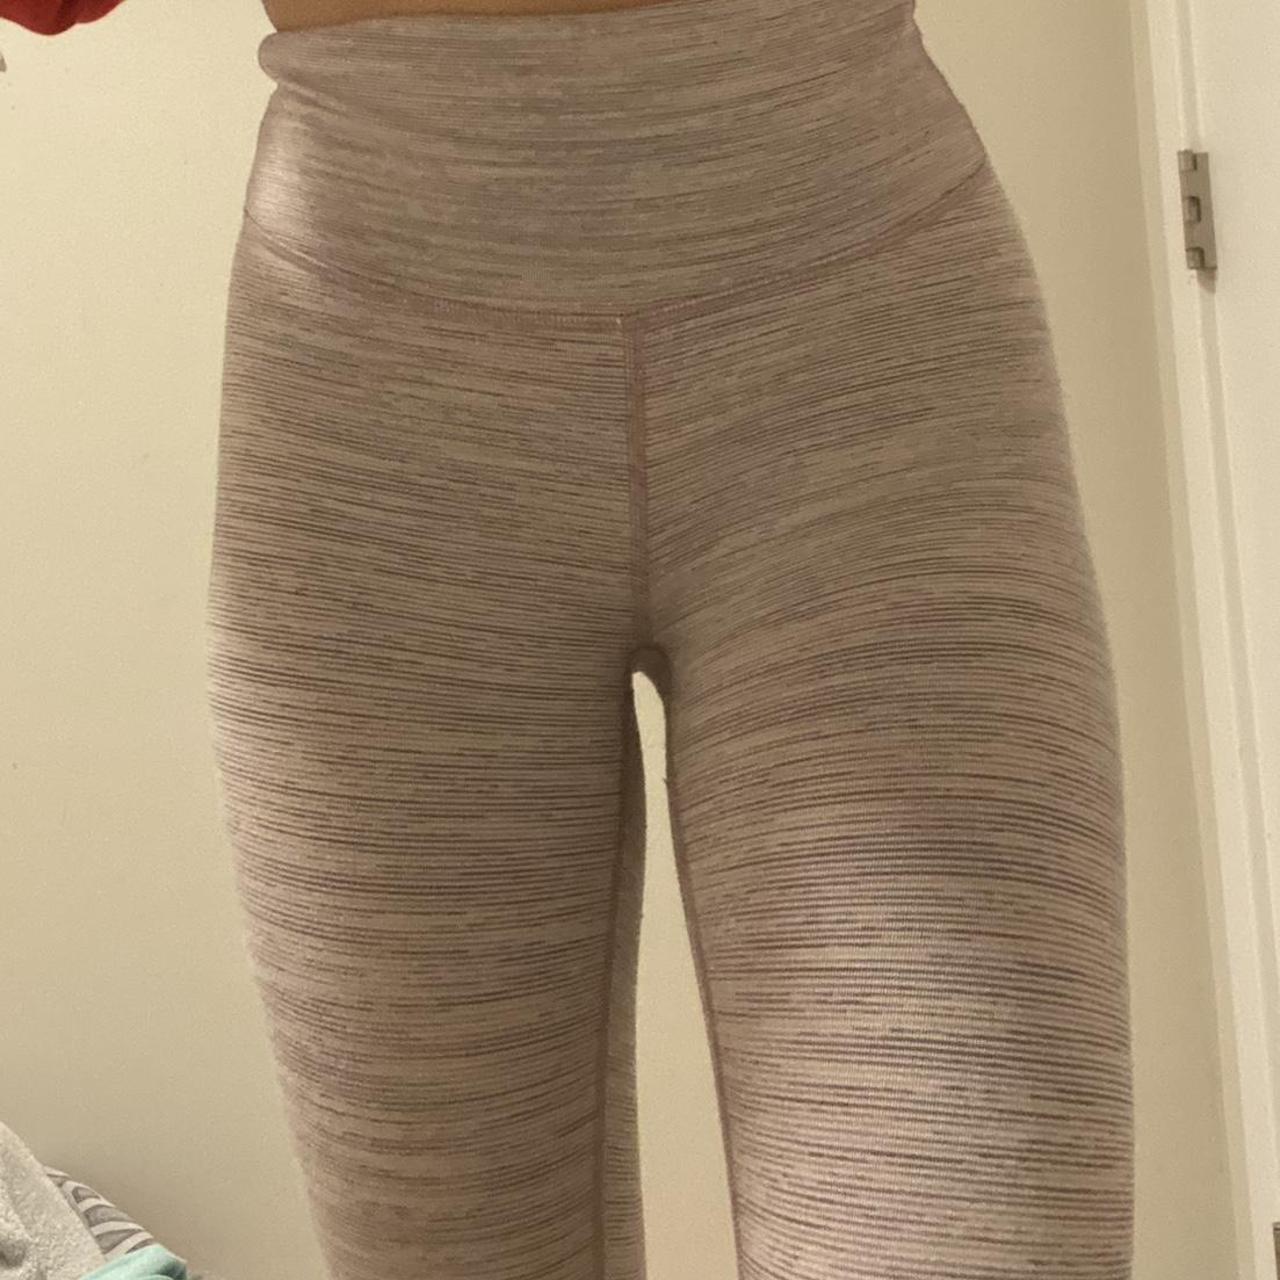 Lululemon leggings size 0 , Super stretchy and comfy